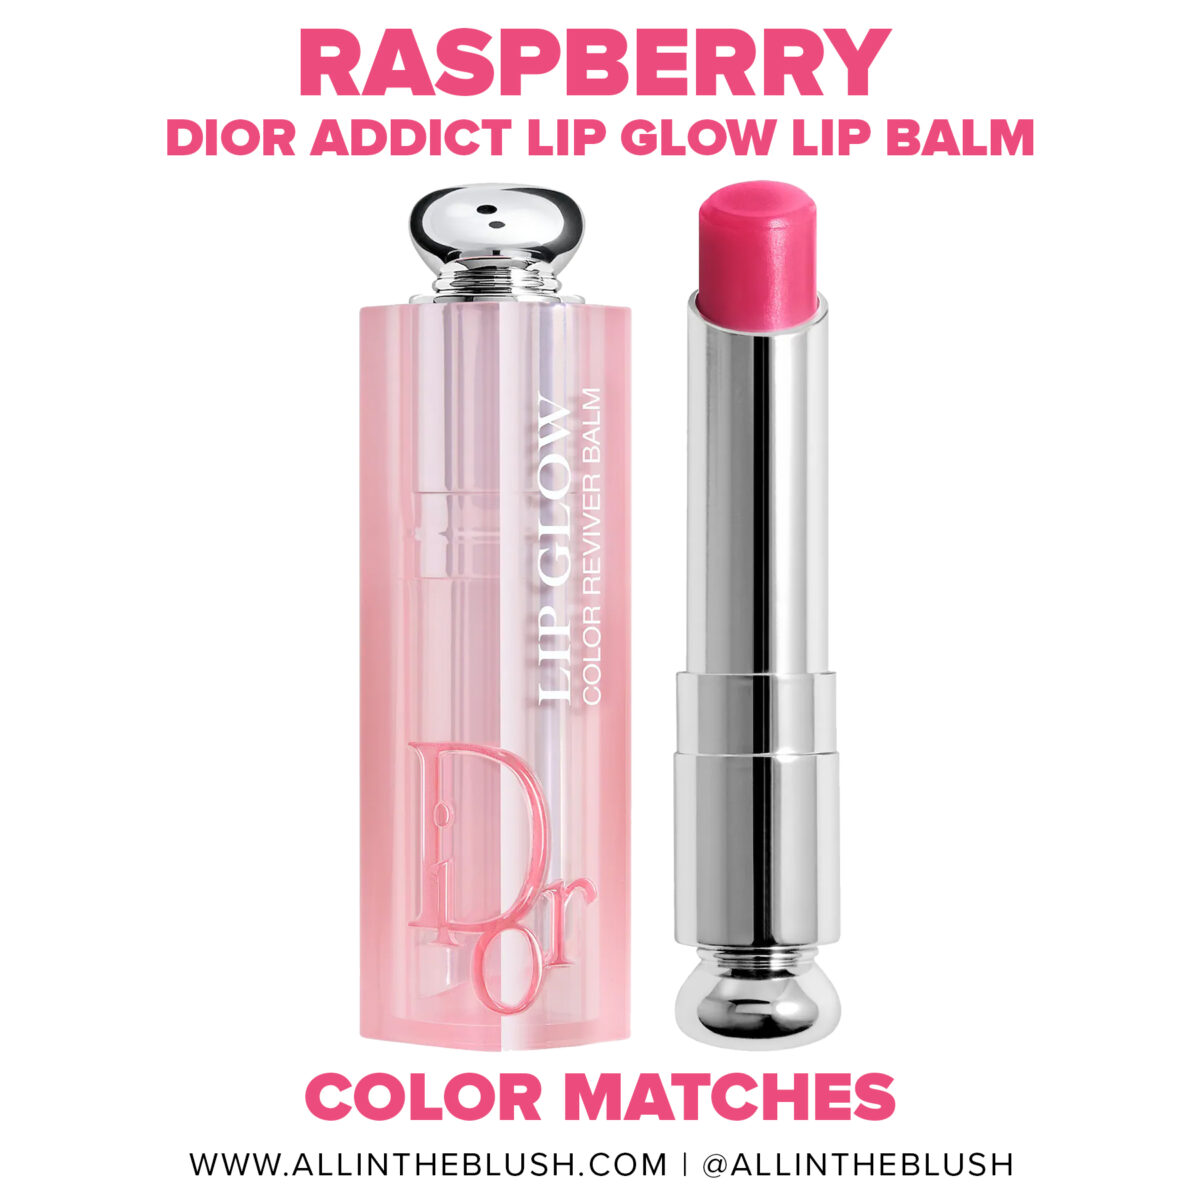 Dior Raspberry Addict Lip Glow Lip Balm Dupes